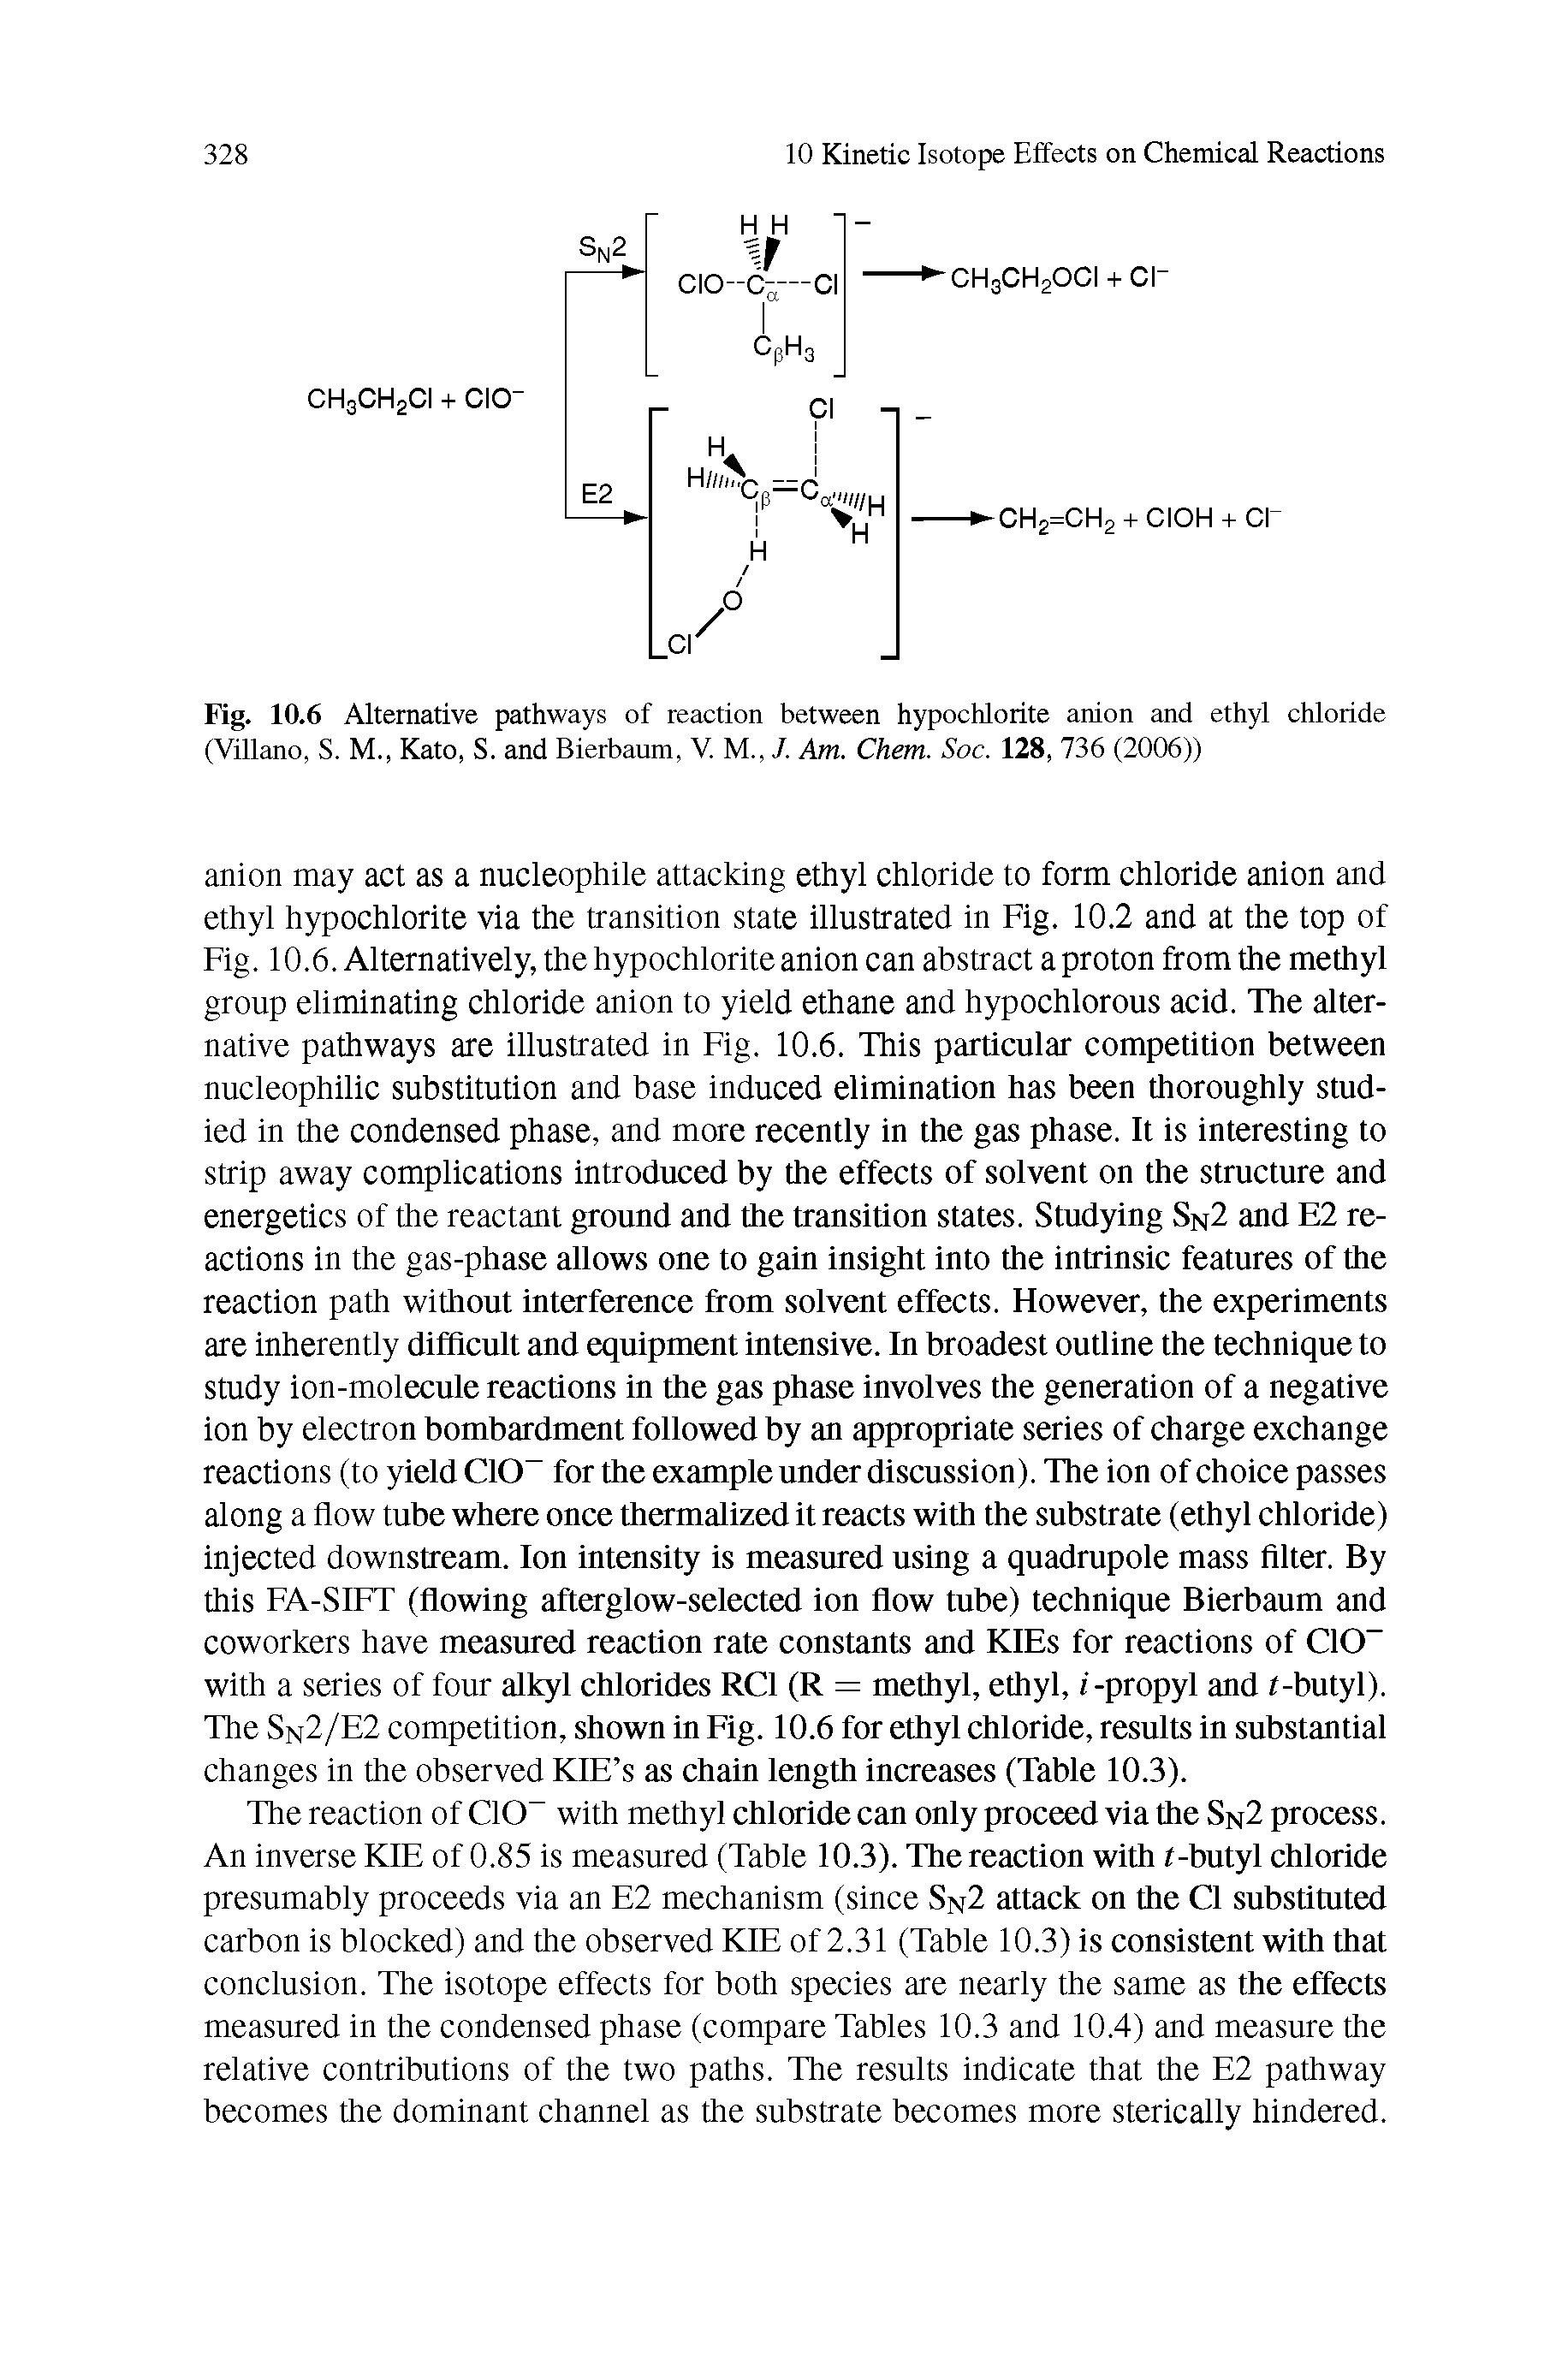 Fig. 10.6 Alternative pathways of reaction between hypochlorite anion and ethyl chloride (Villano, S. M., Kato, S. and Bierbaum, V. M., J. Am. Chem. Soc. 128, 736 (2006))...